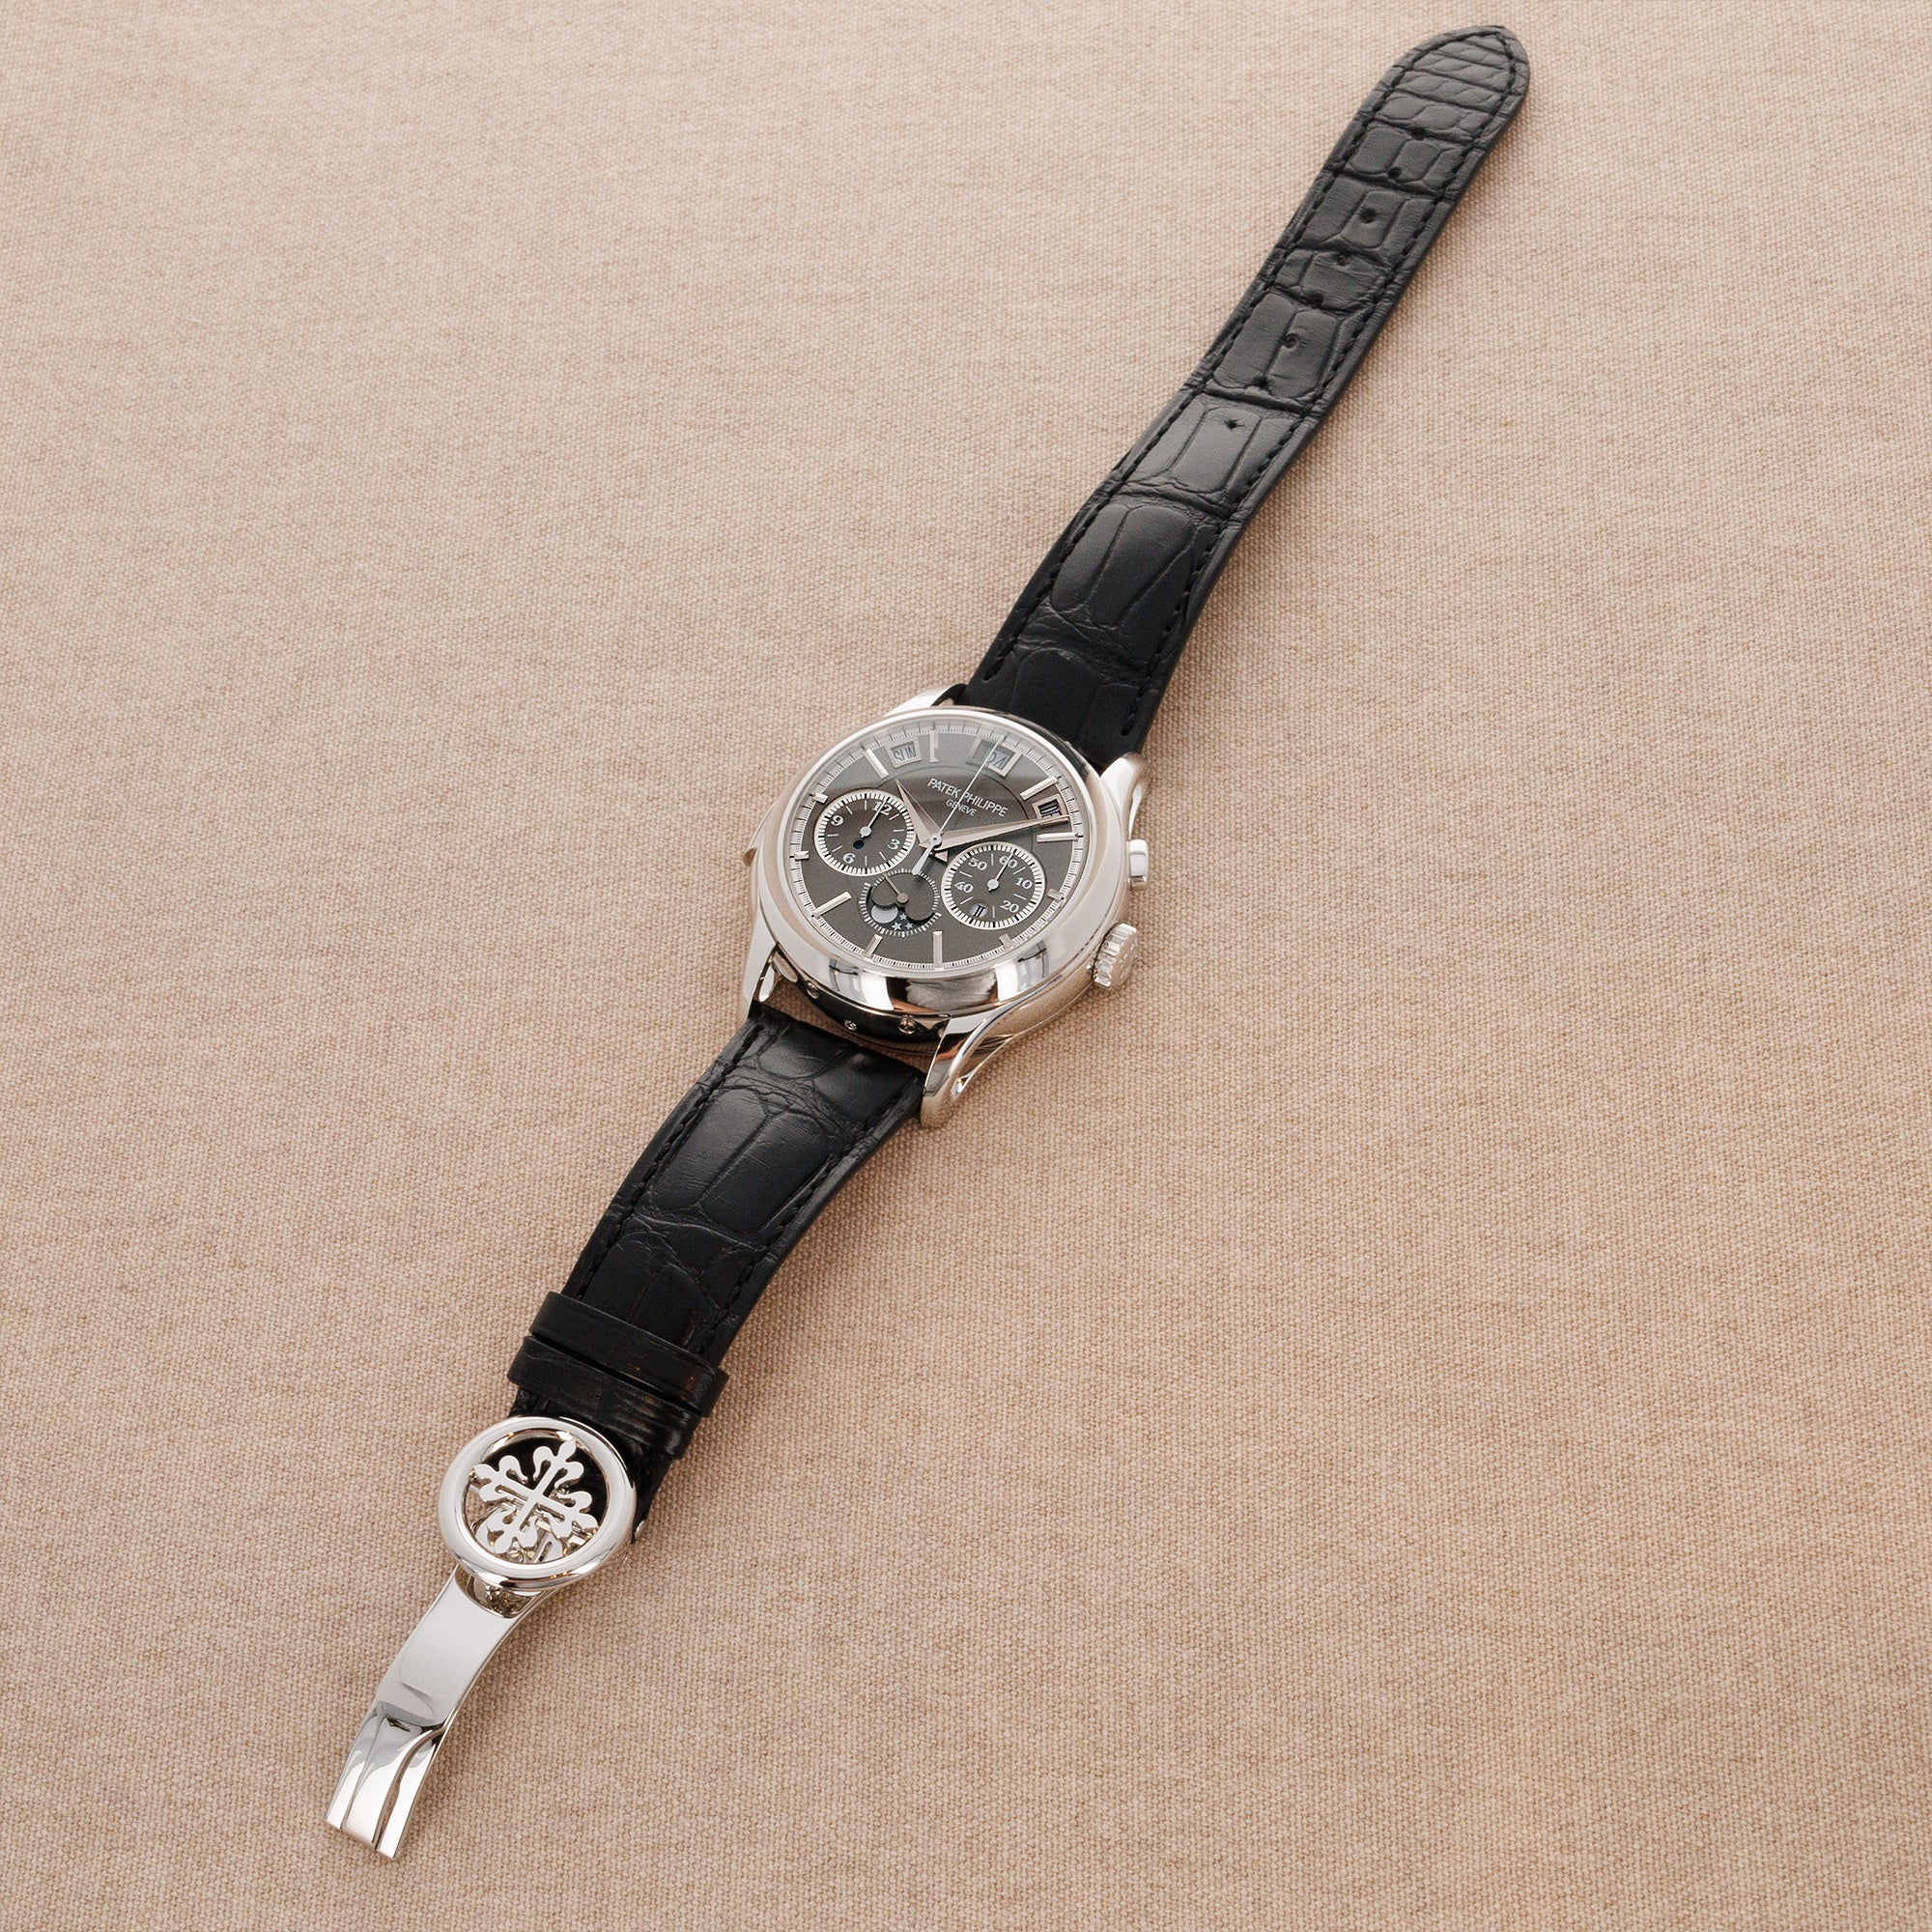 Patek Philippe - Patek Philippe Platinum Perpetual Calendar Minute Repeater Chronograph Ref. 5208 - The Keystone Watches